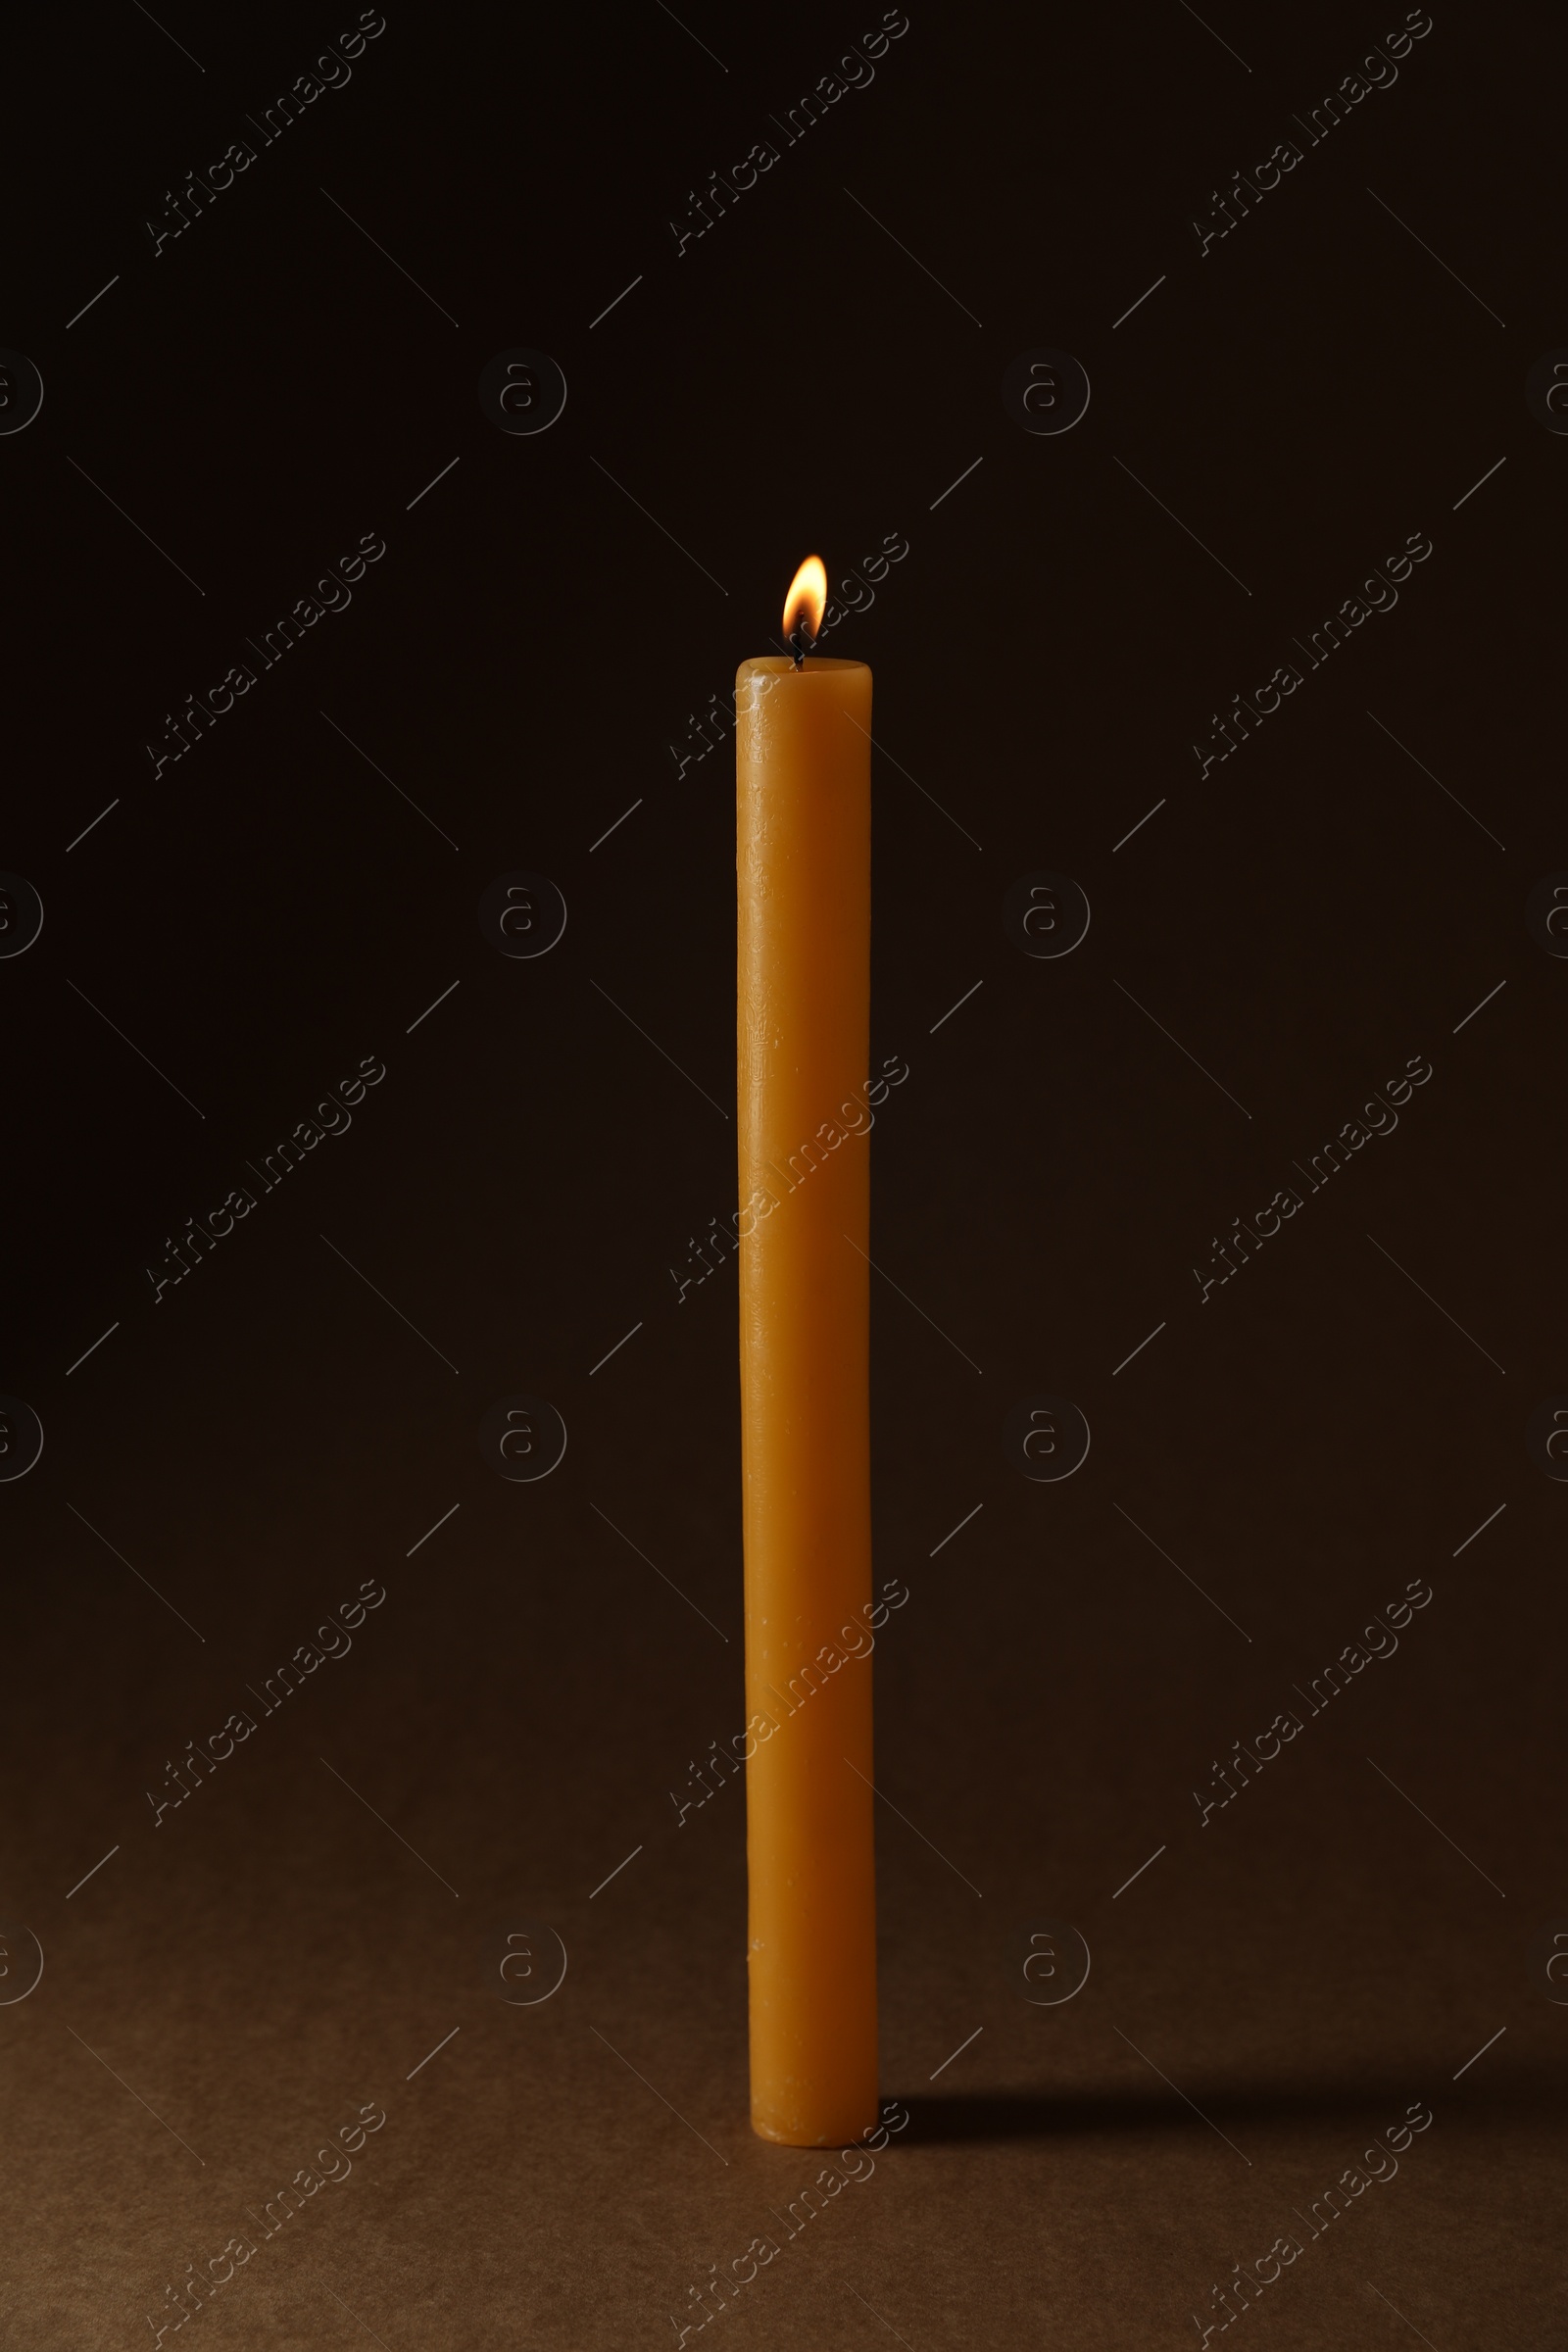 Photo of Burning church wax candle on dark background